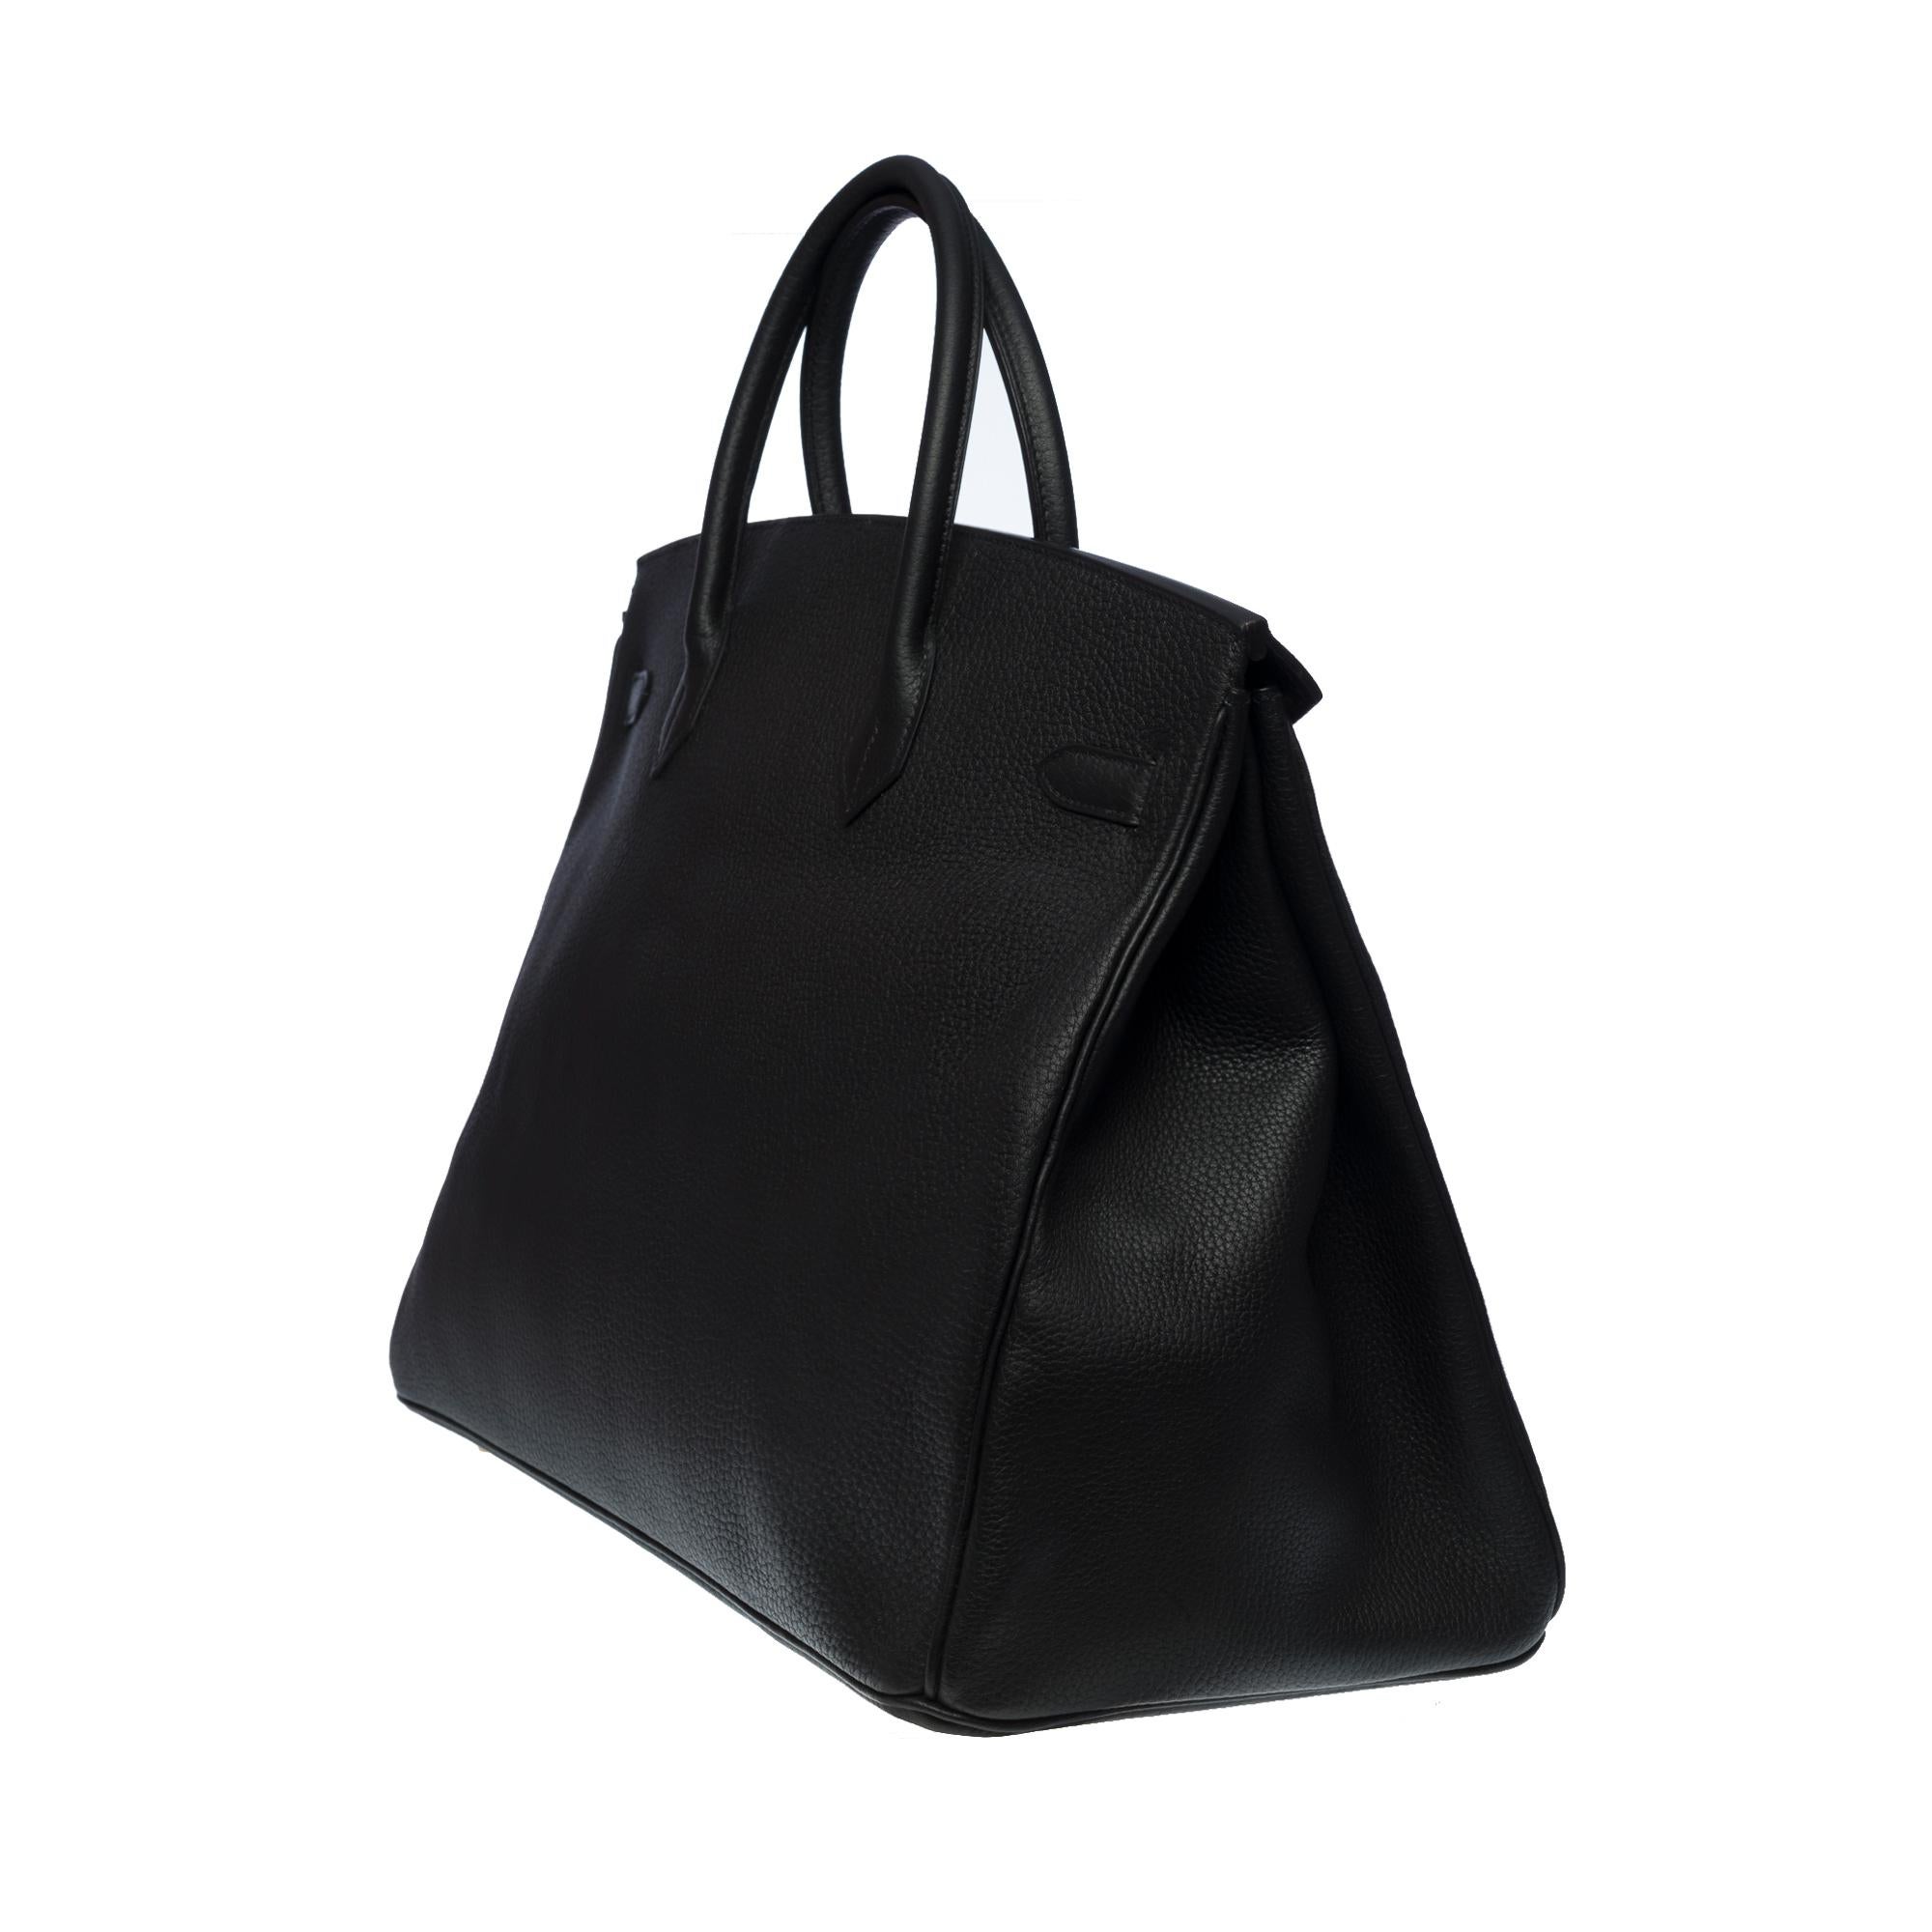 Stunning Hermes Birkin 40cm handbag in Black Togo leather, GHW 1